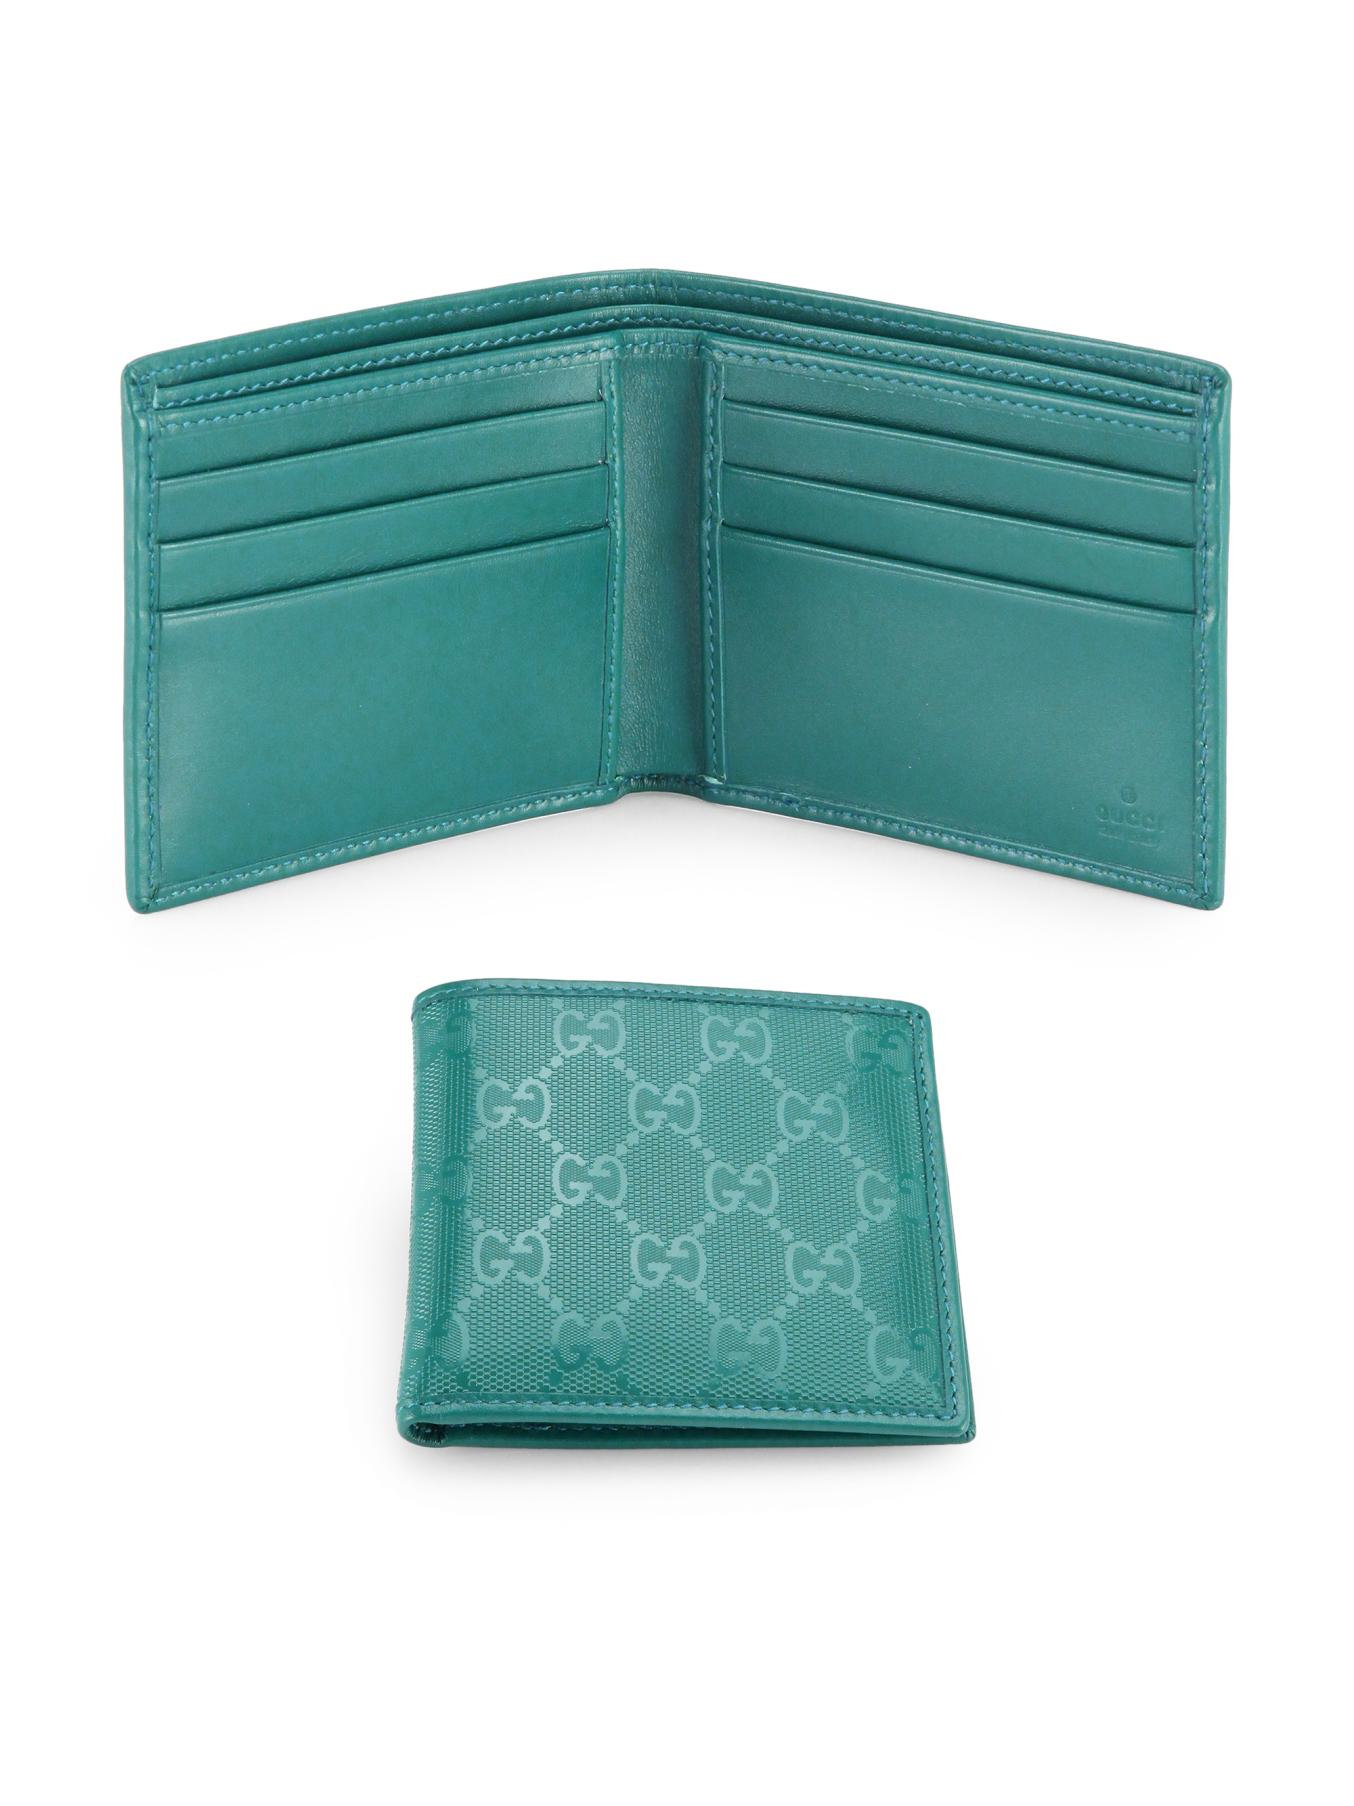 Gucci Ophidia bi-fold Wallet - Farfetch